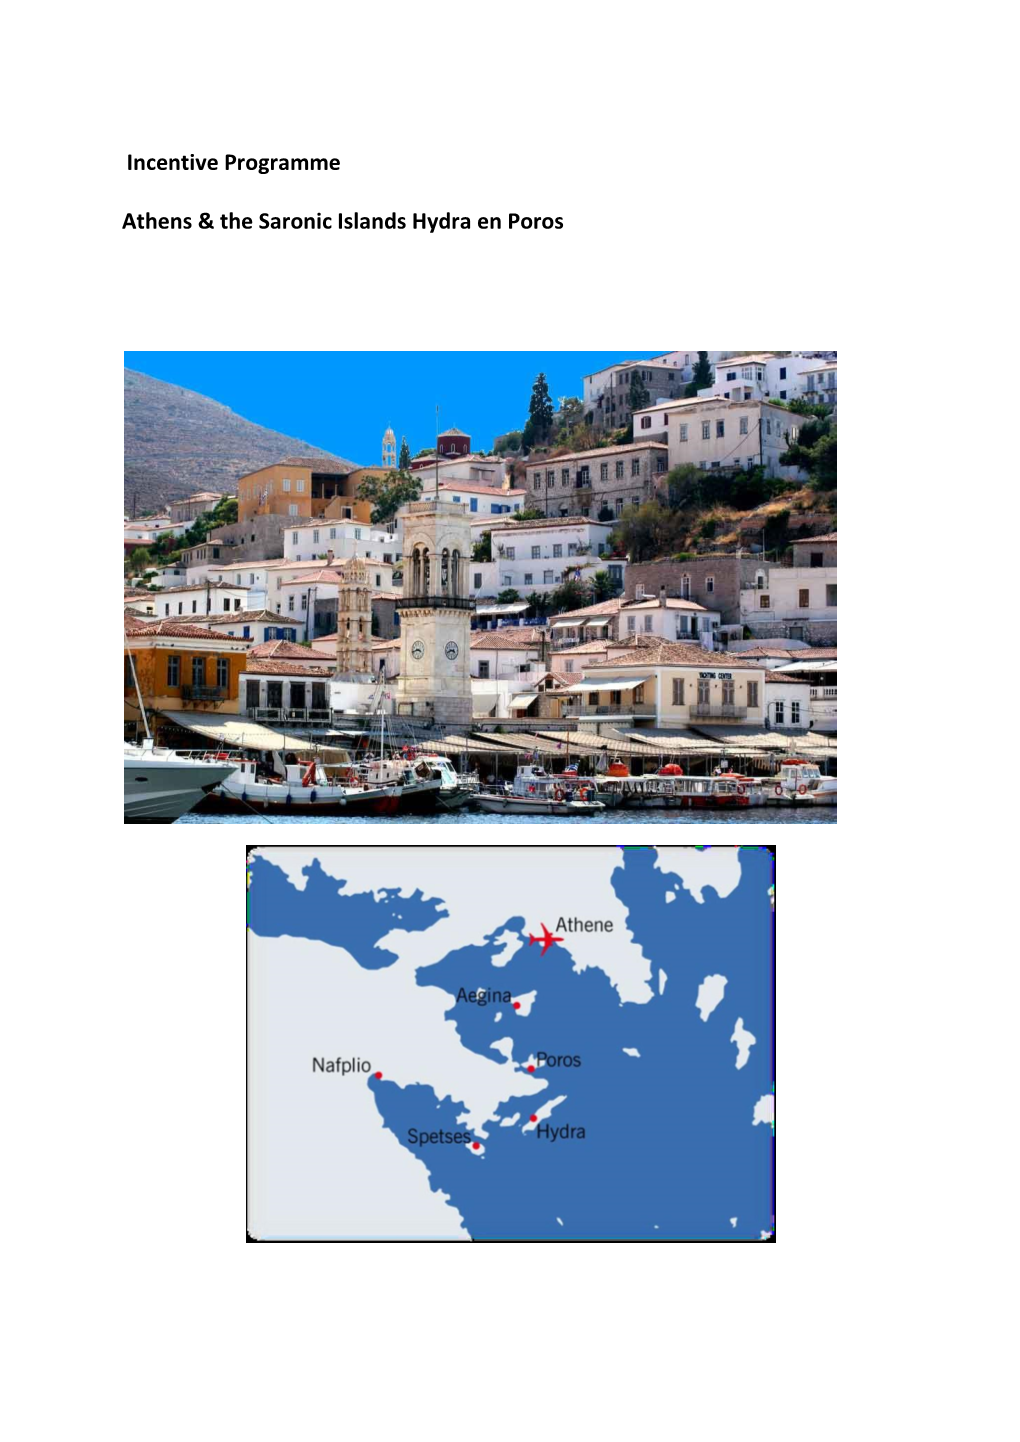 Incentive Programme Athens & the Saronic Islands Hydra En Poros